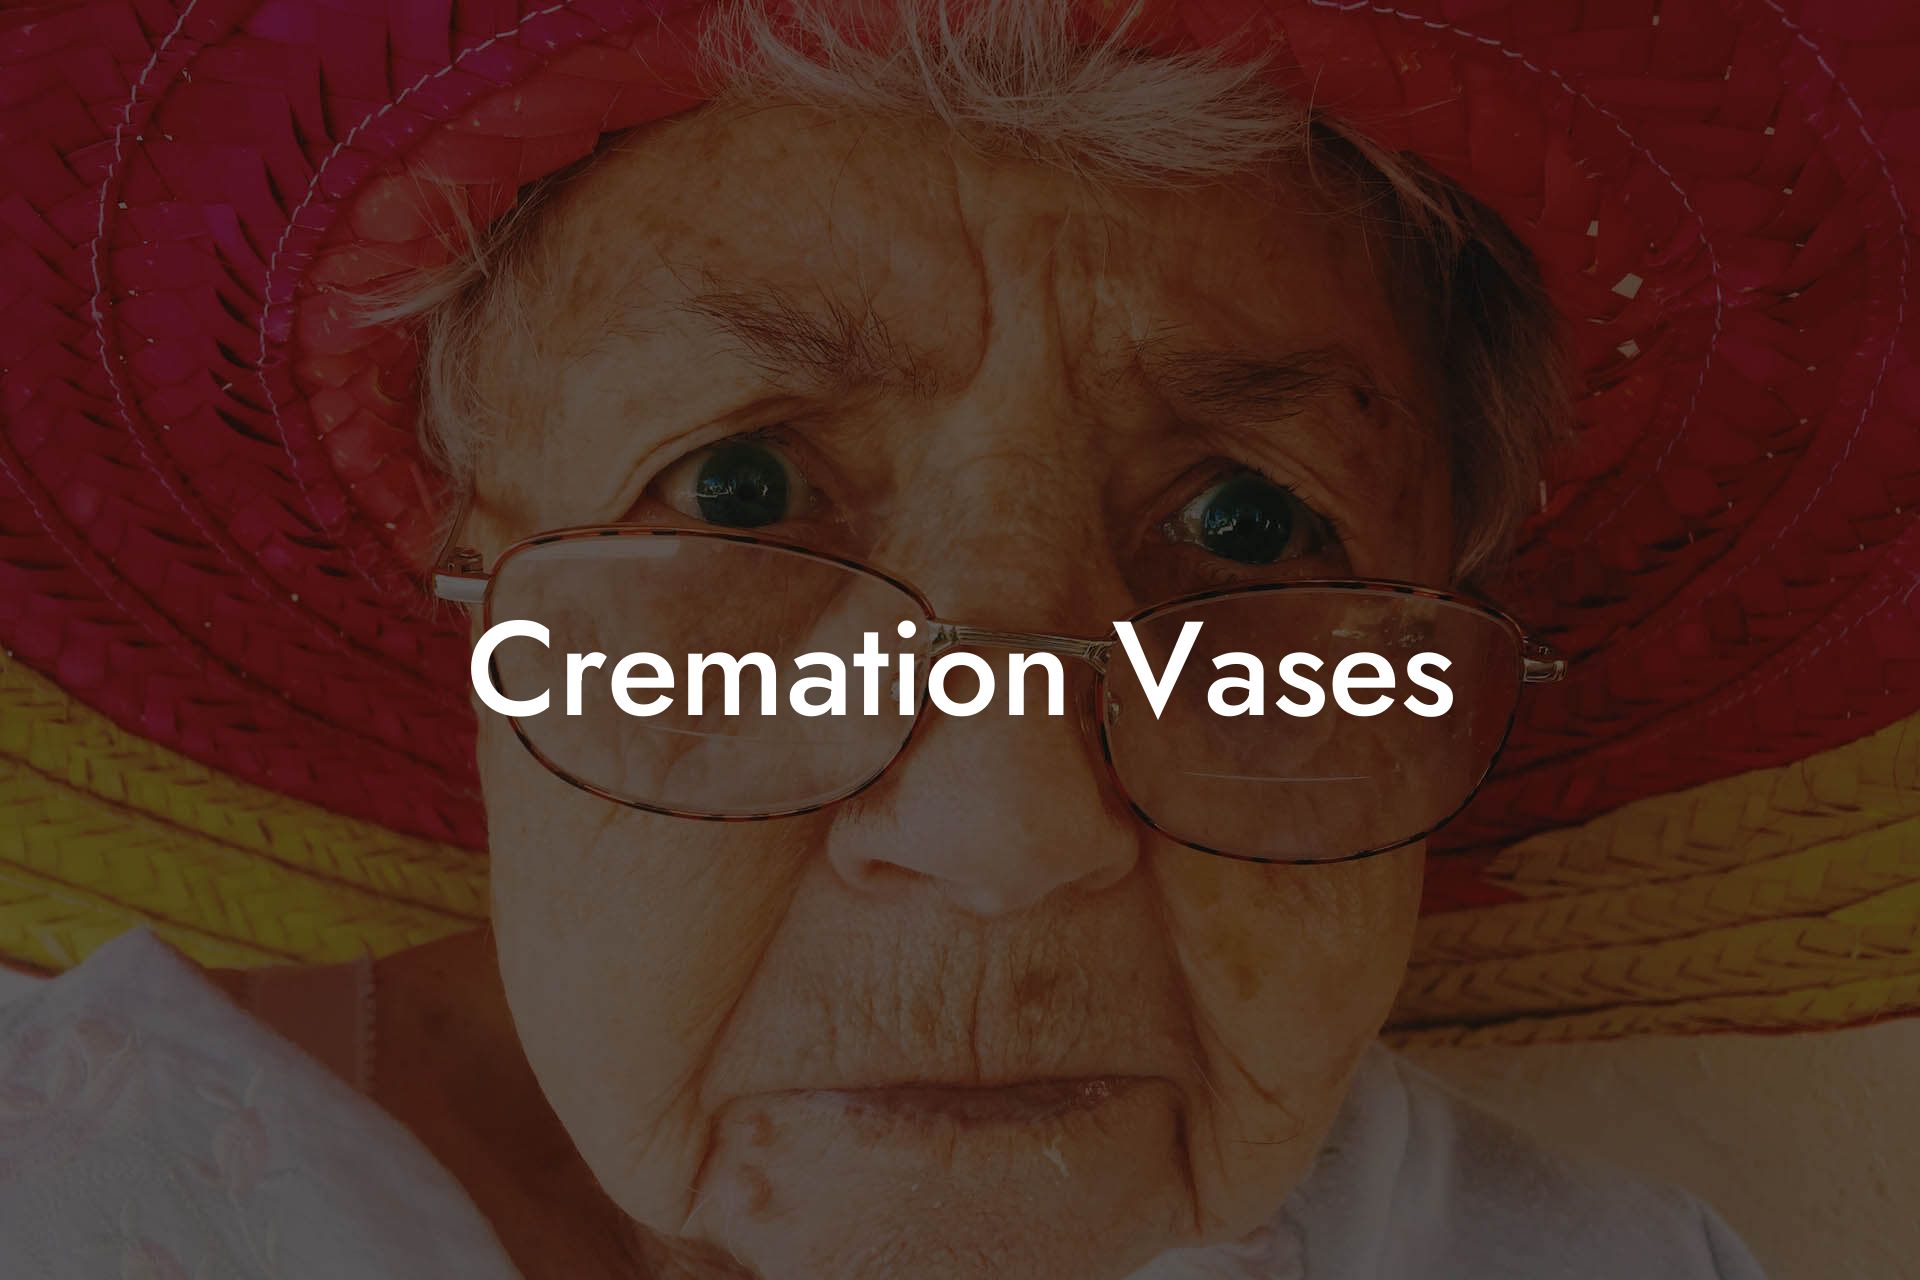 Cremation Vases